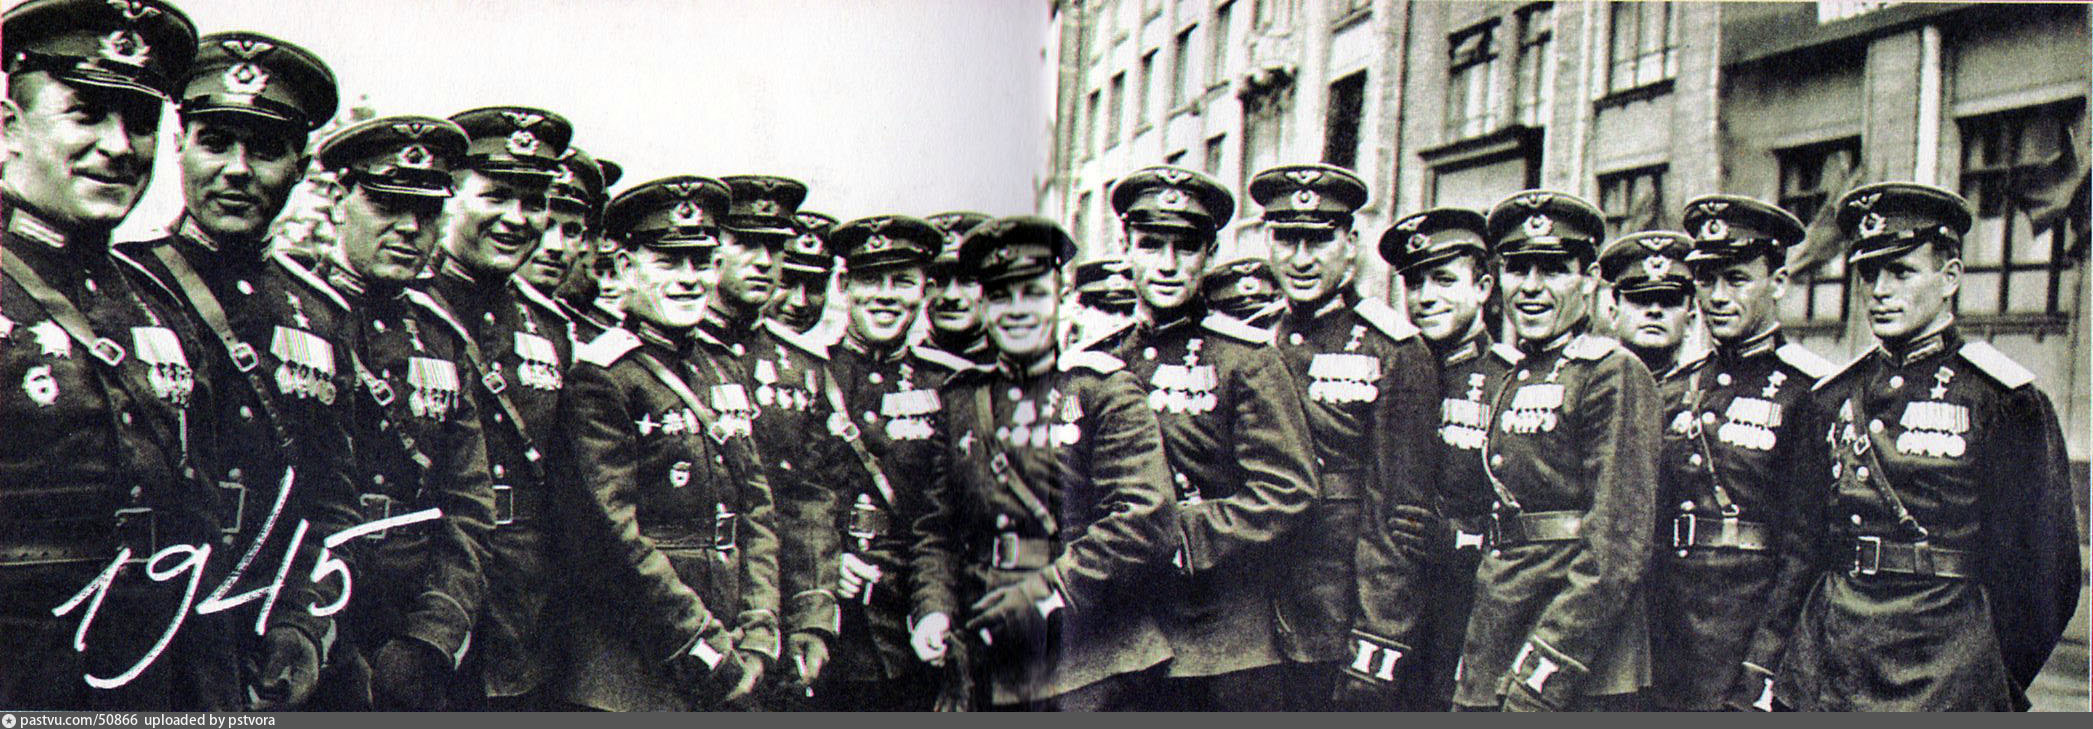 9 мая фронт. Летчики герои советского Союза участники парада Победы. Летчики участники парада Победы 1945 года. Летчики ВМВ дважды герои советского Союза.